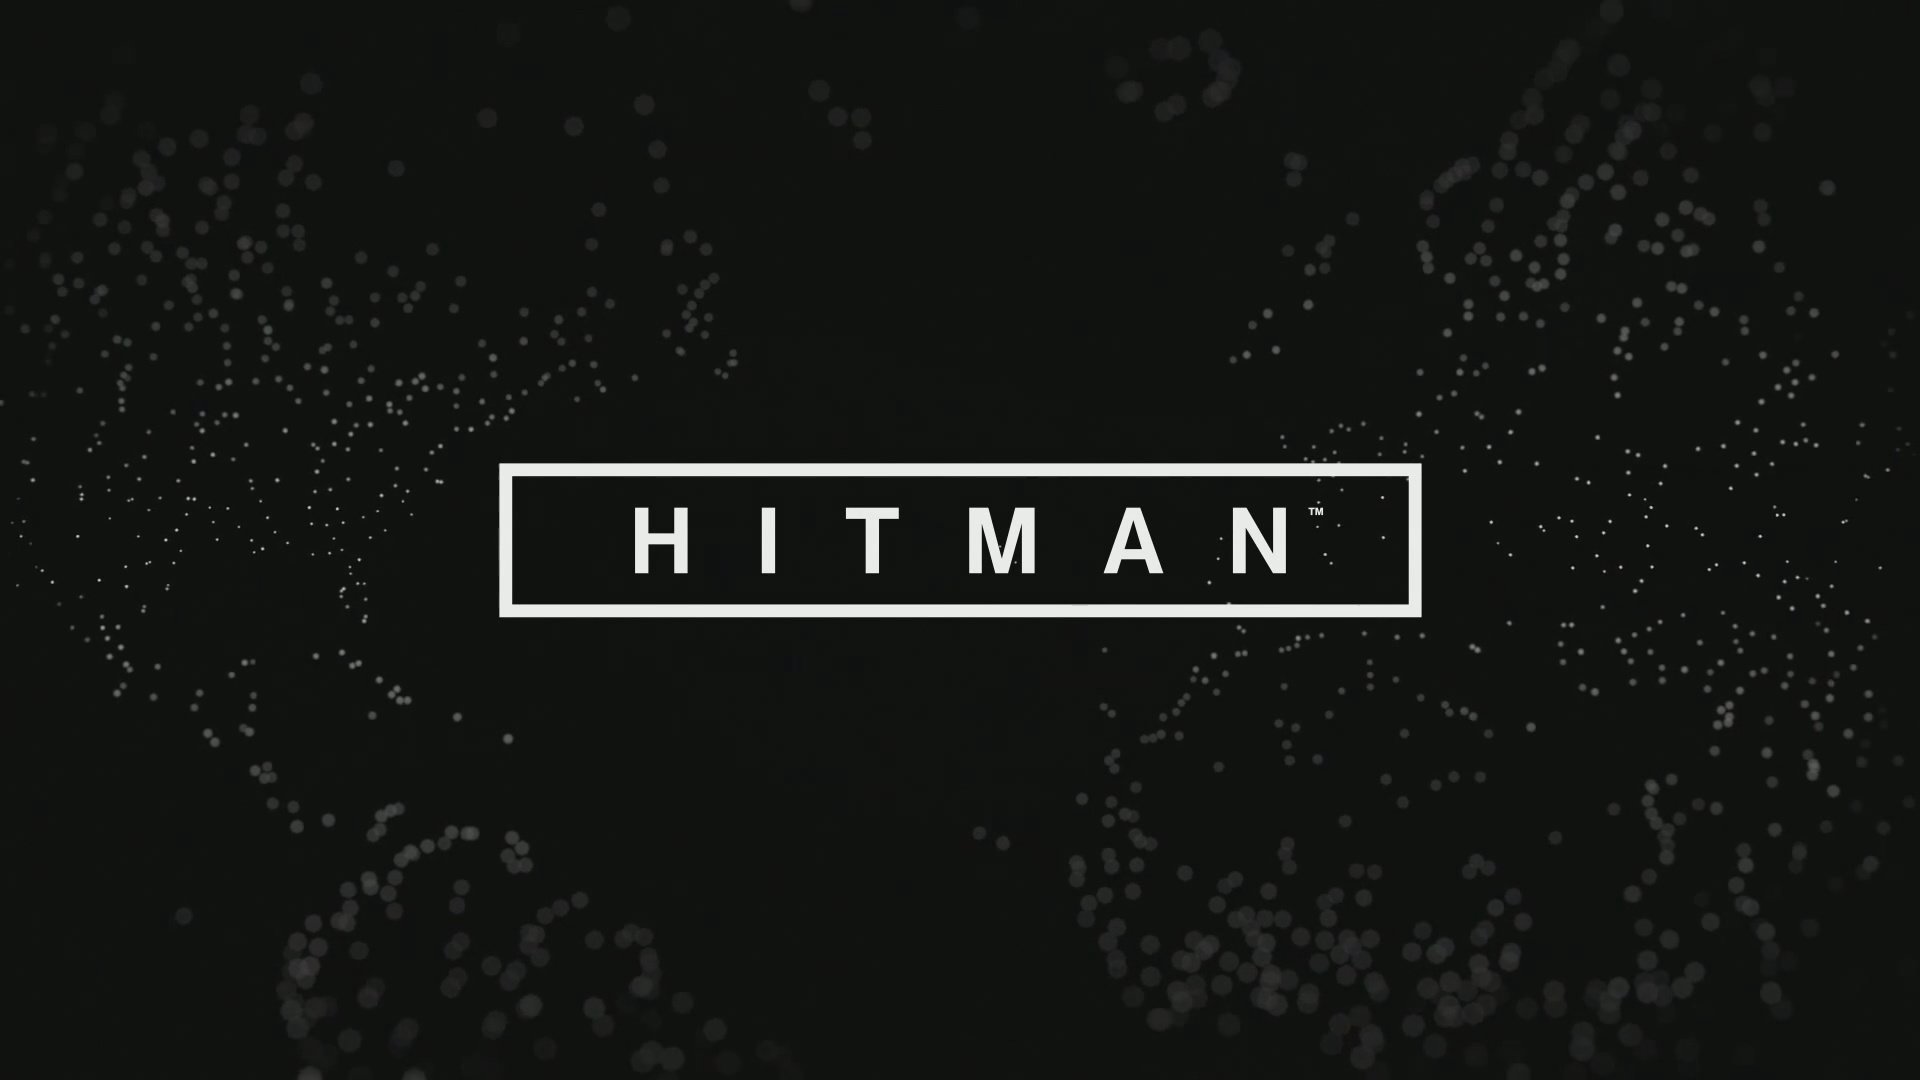 High resolution Hitman (2016) full hd 1920x1080 wallpaper ID:243651 for PC